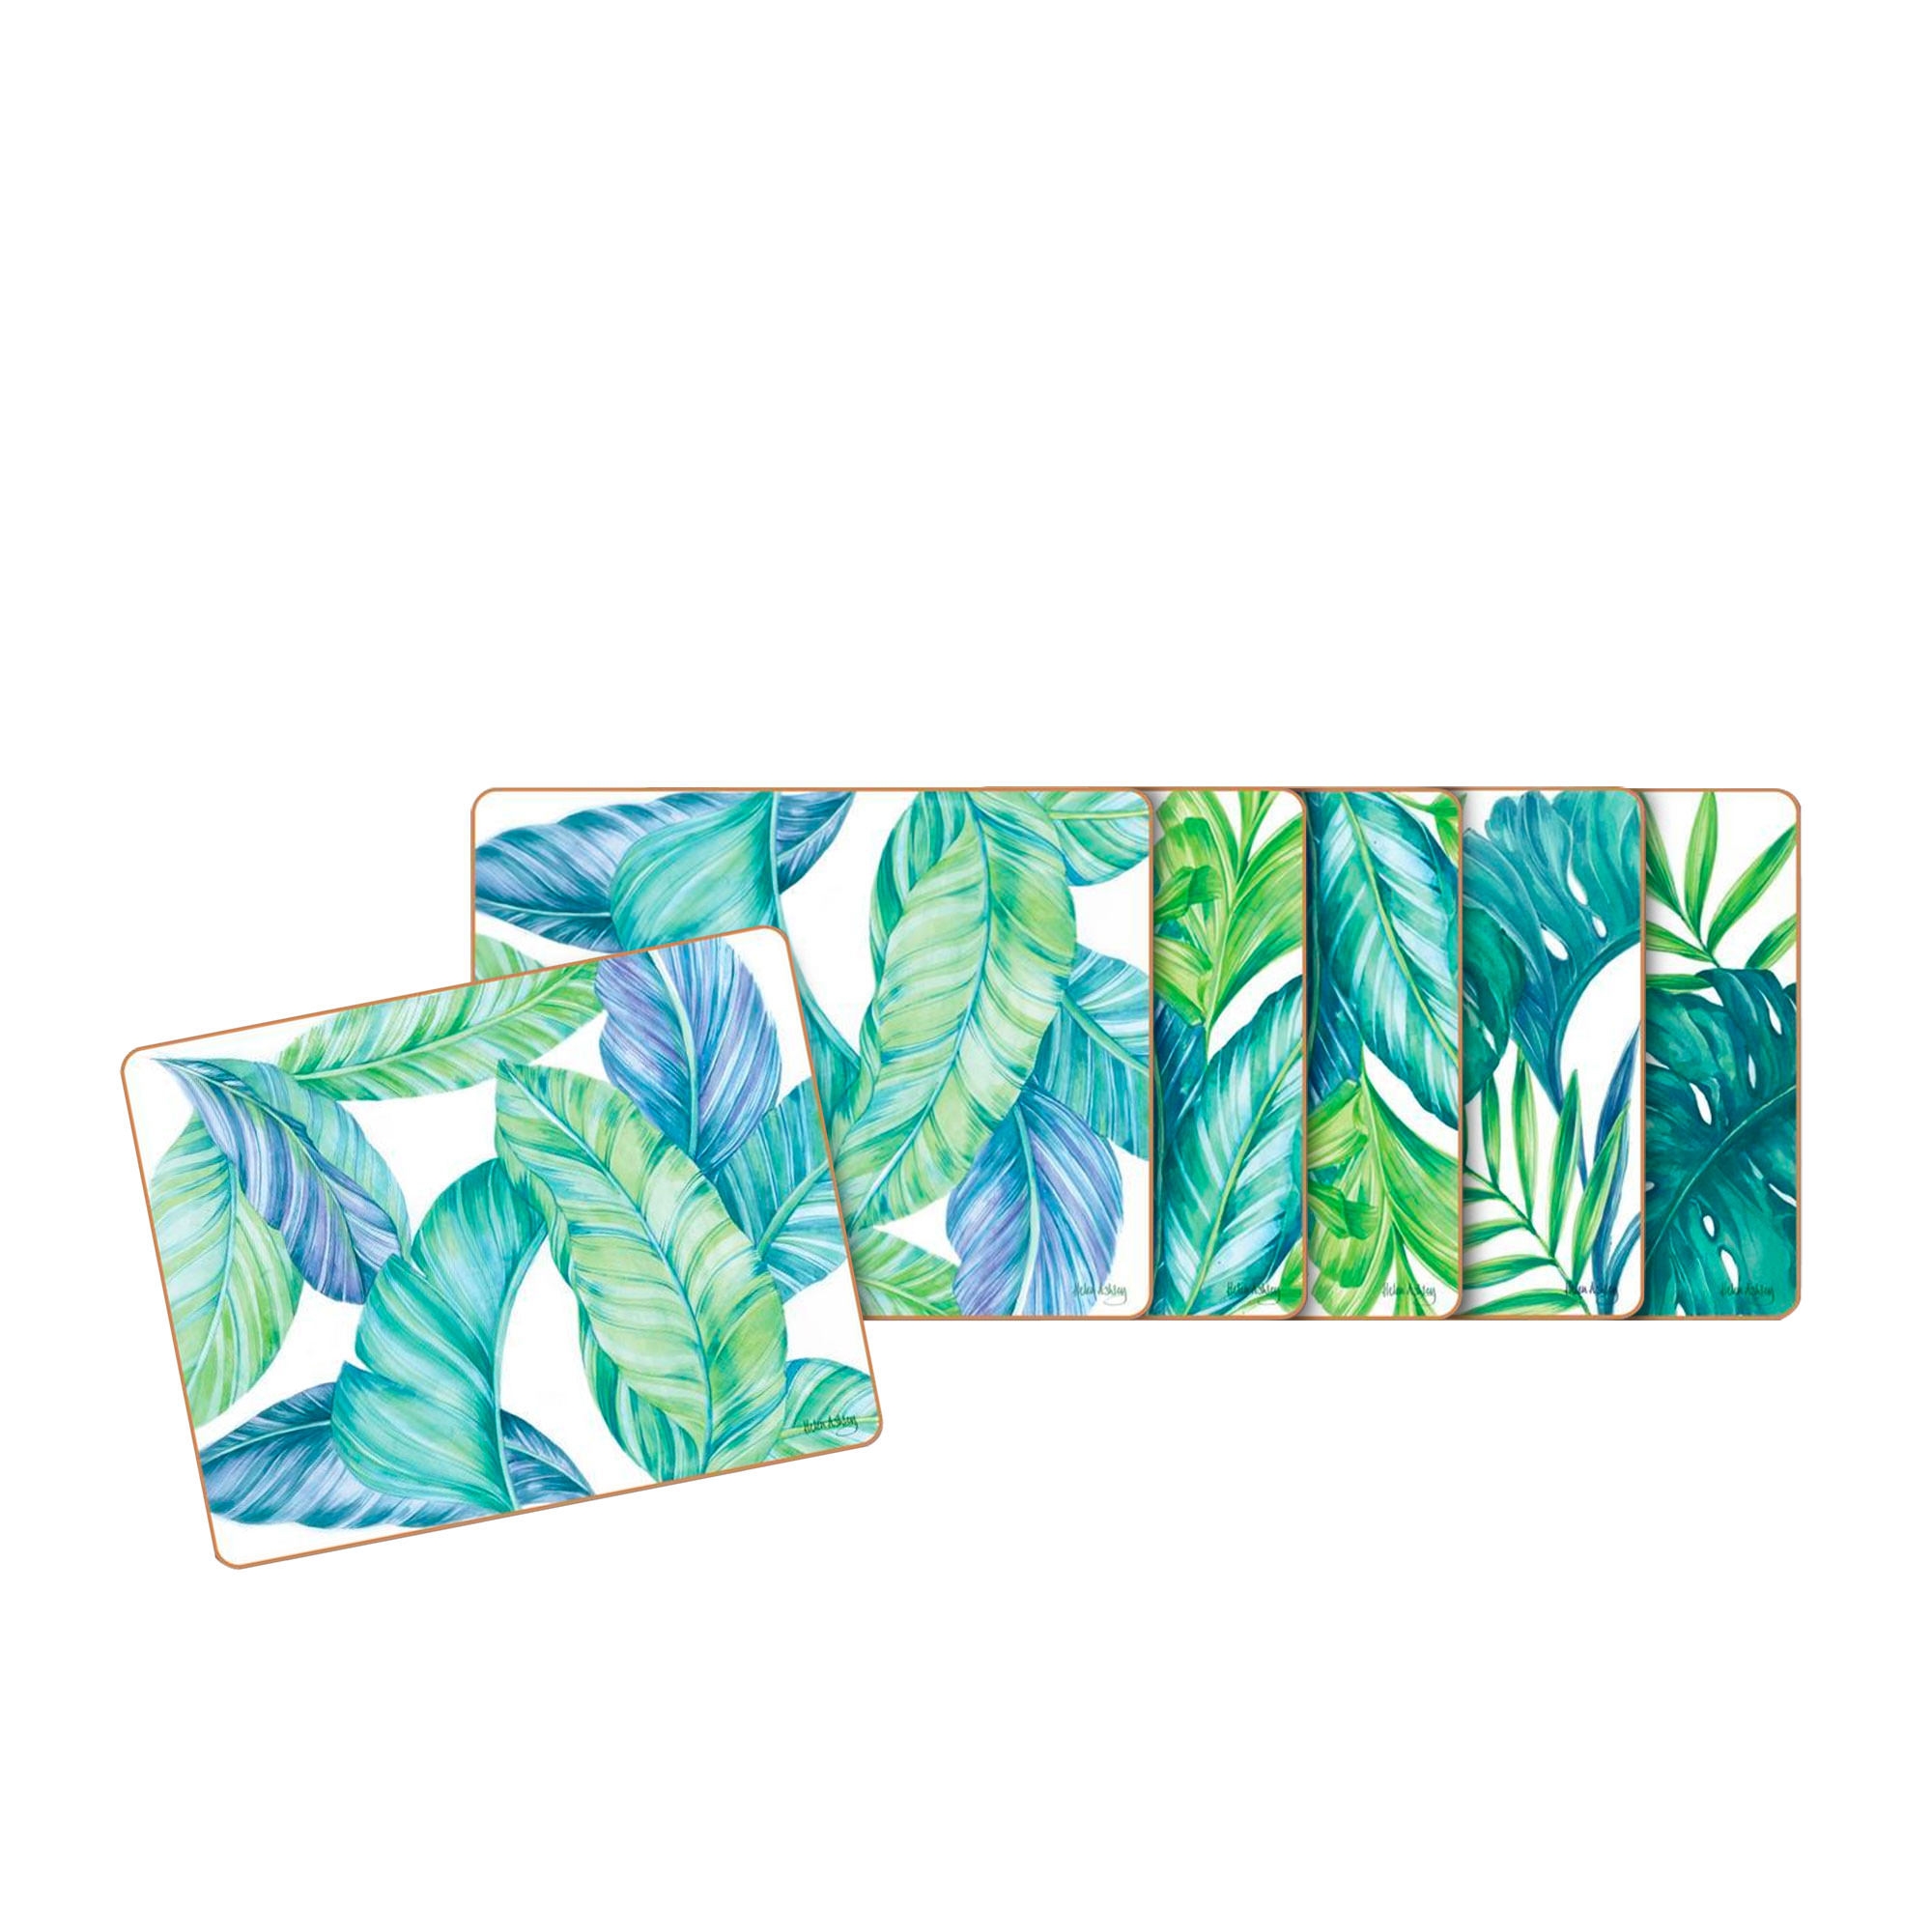 Cinnamon Rectangular Coaster Set of 6 Tropical Leaves Image 1